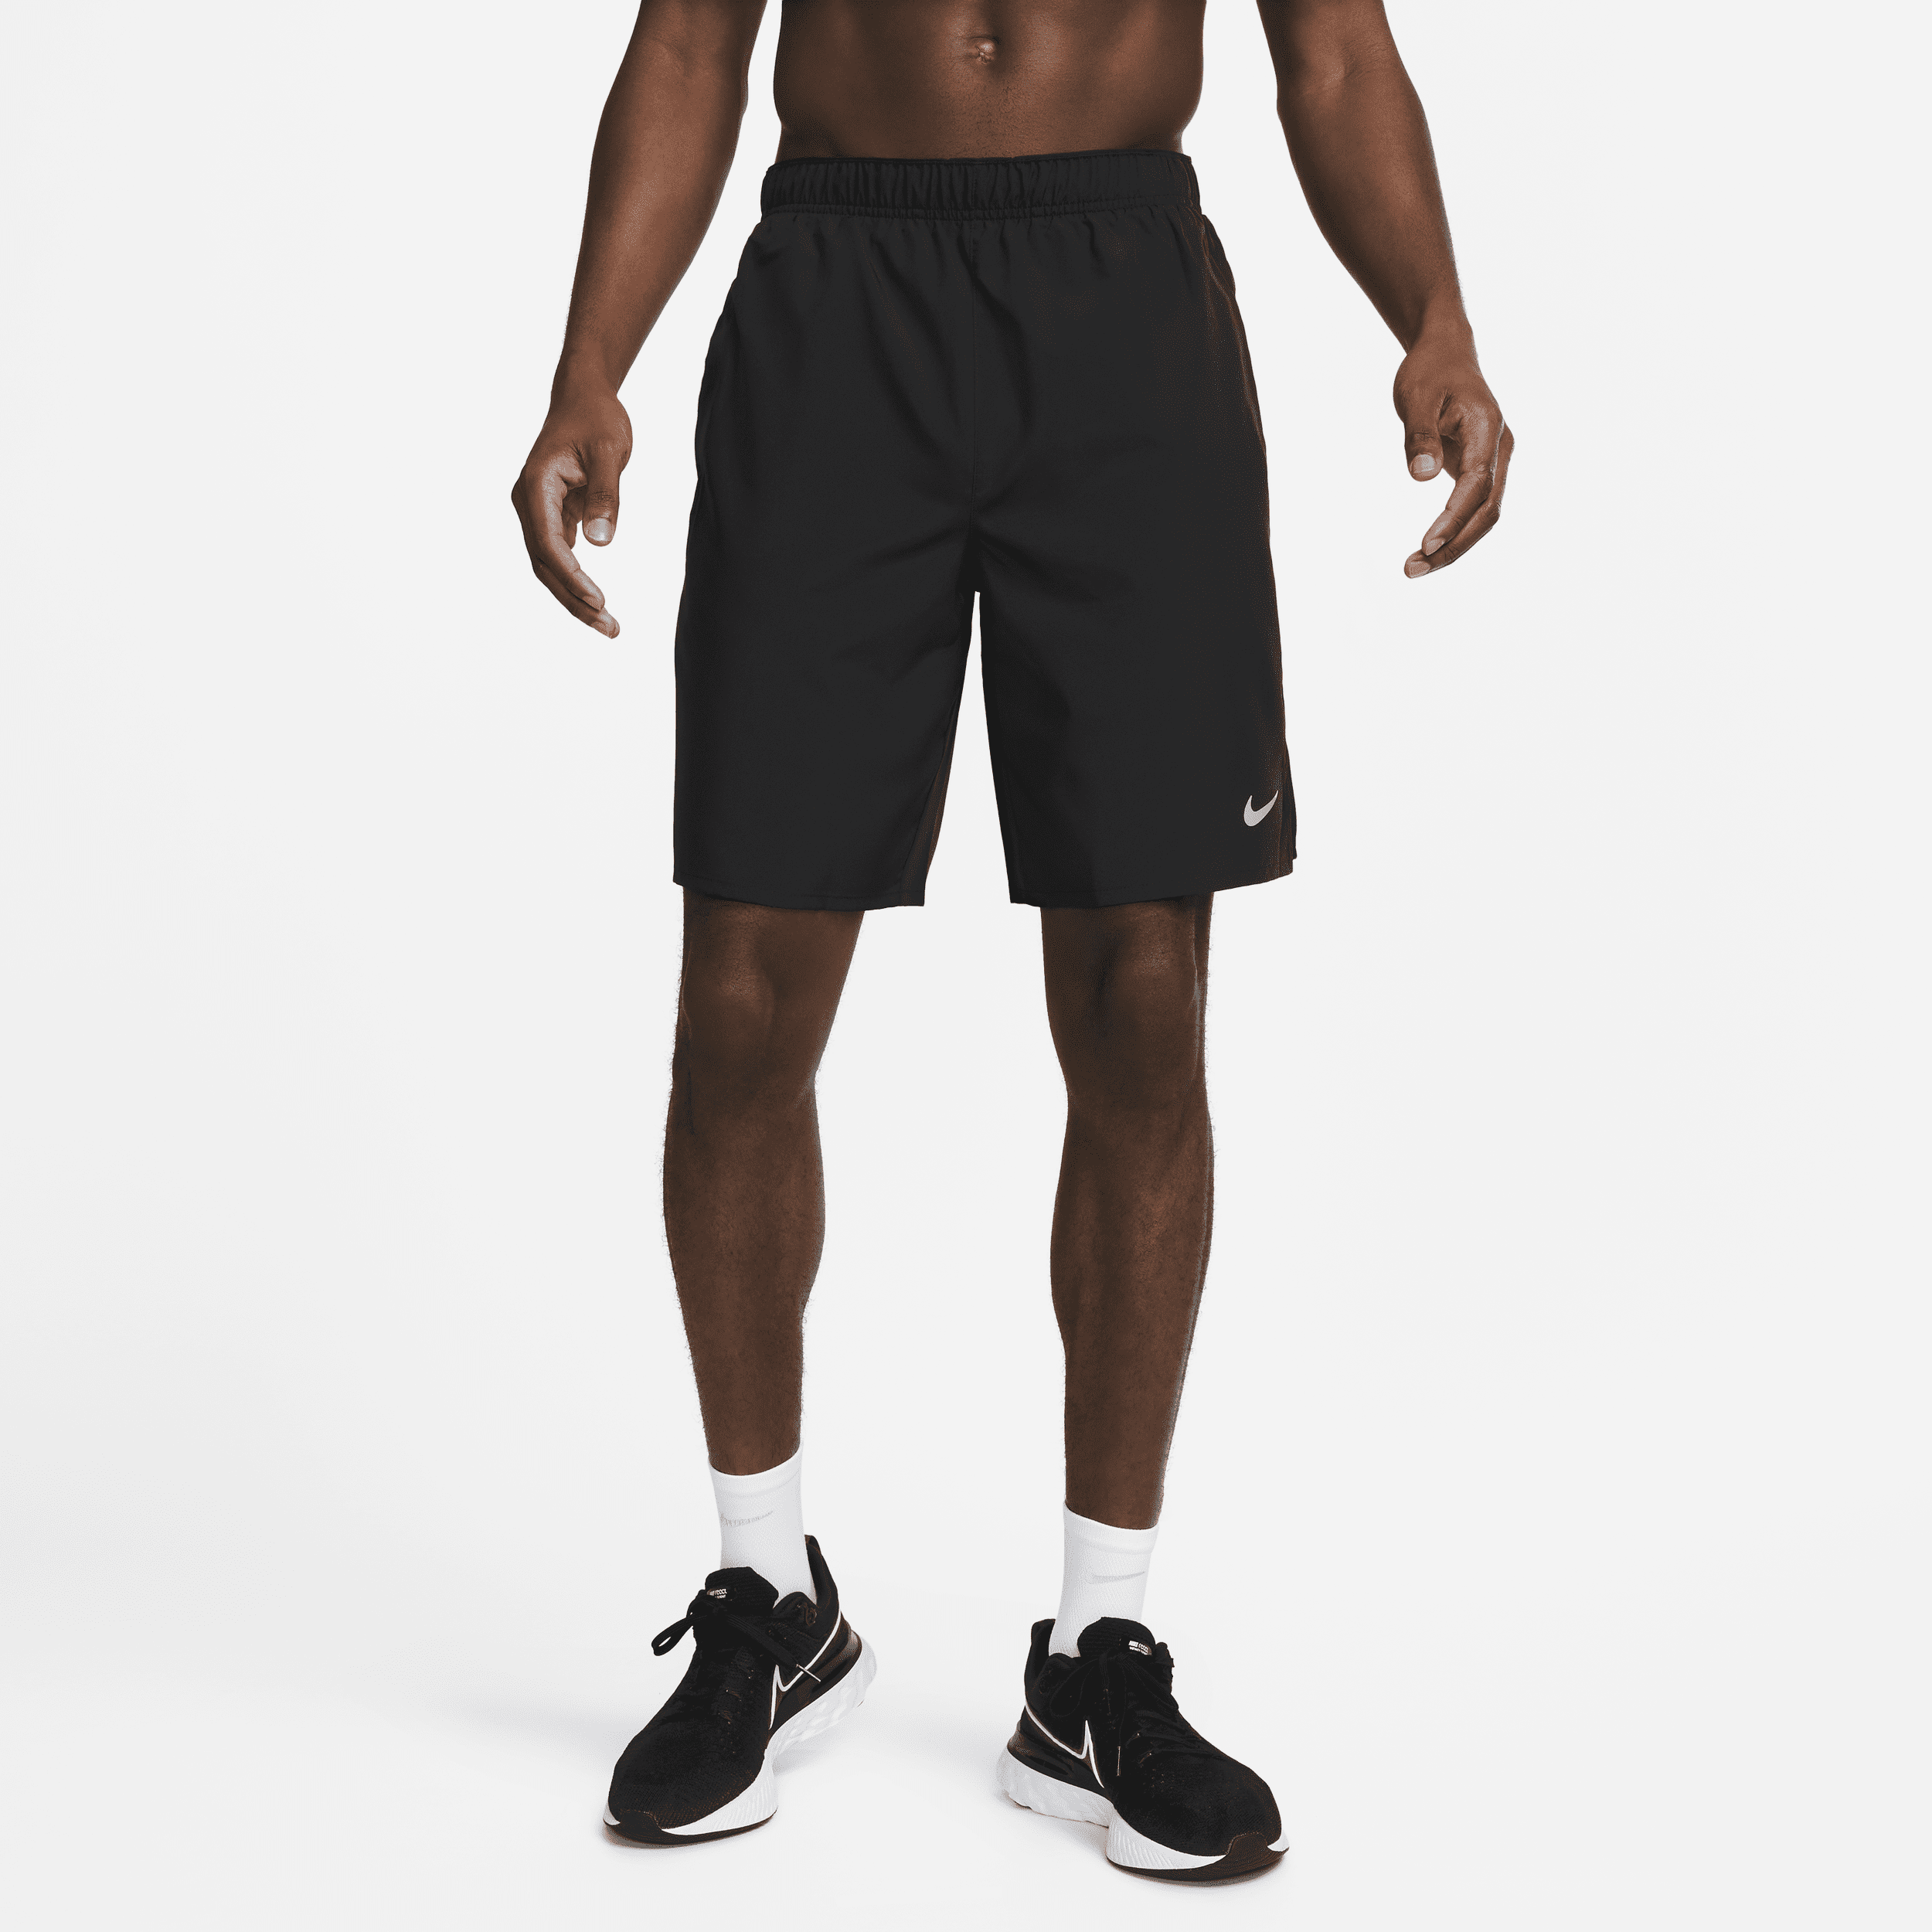 Nike Challenger Pantalón corto Dri-FIT versátil de 23 cm sin forro - Hombre - Negro